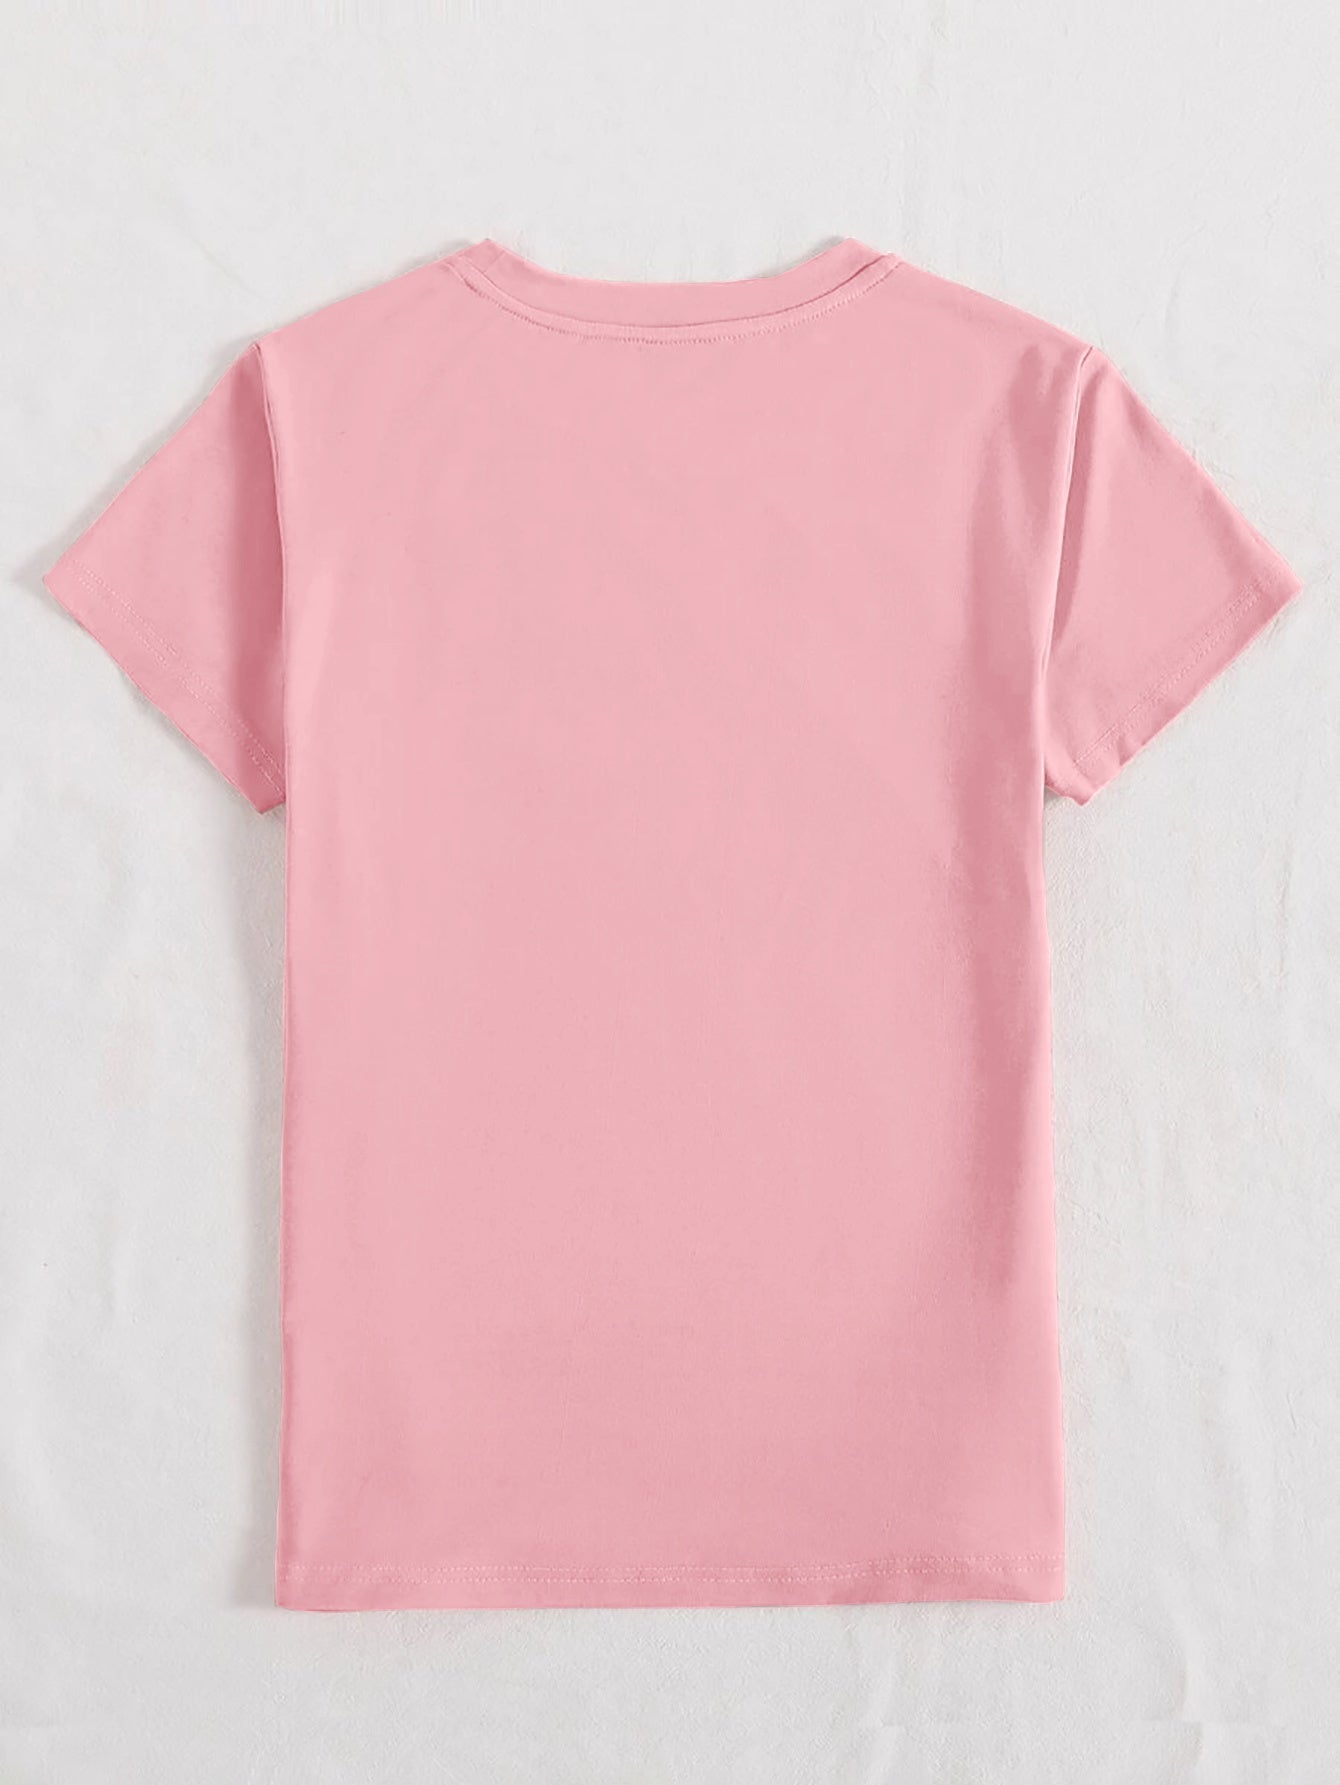 Rabbit Round Neck Short Sleeve T-Shirt  - 4 colors